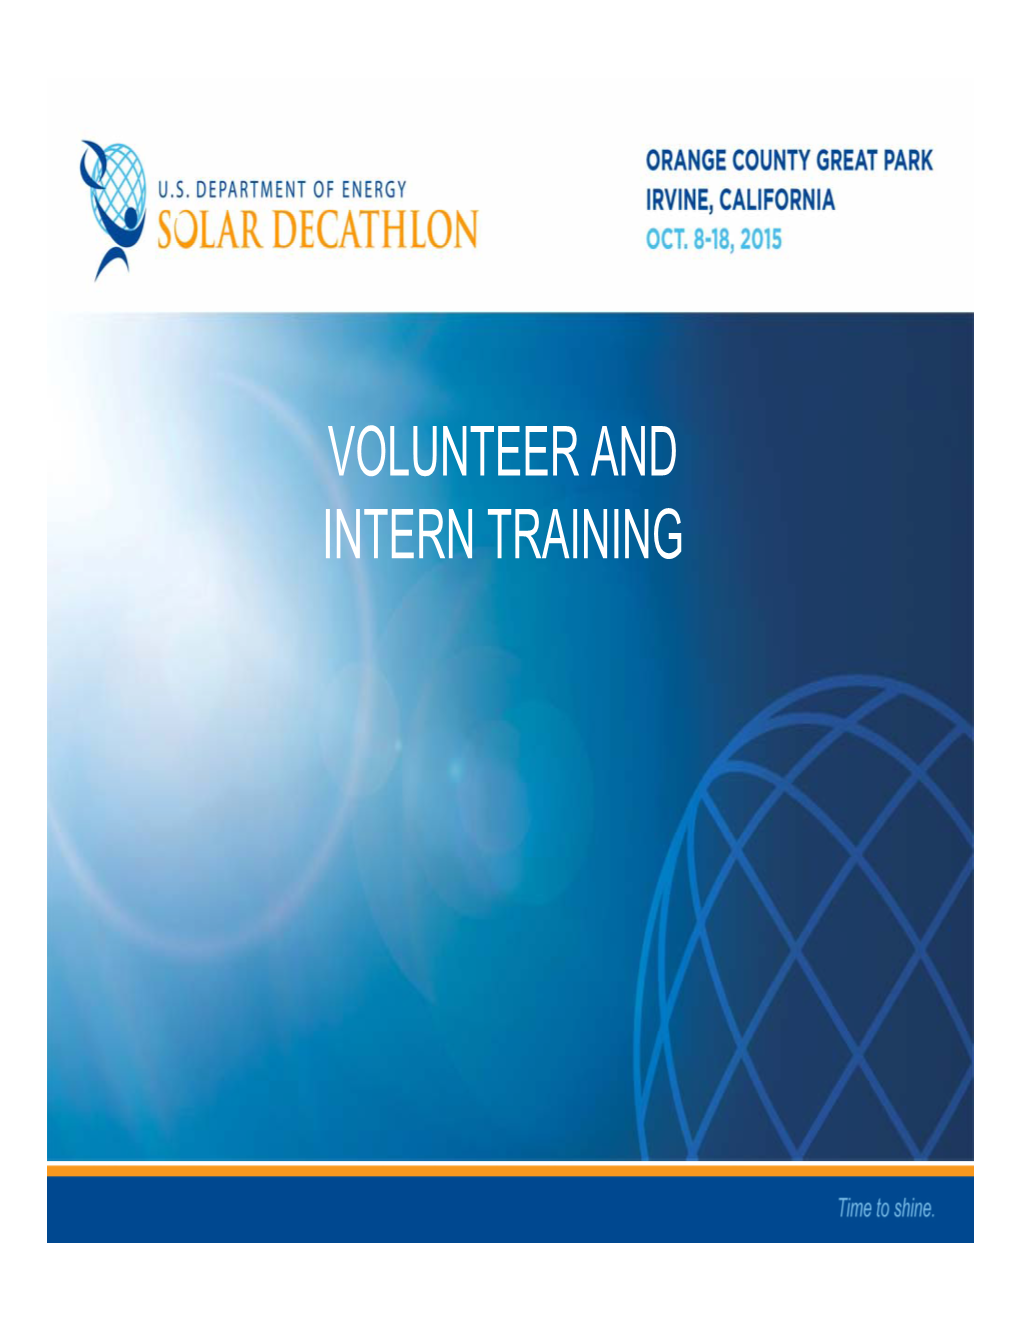 U.S. Department of Energy Solar Decathlon 2015 Volunteer And